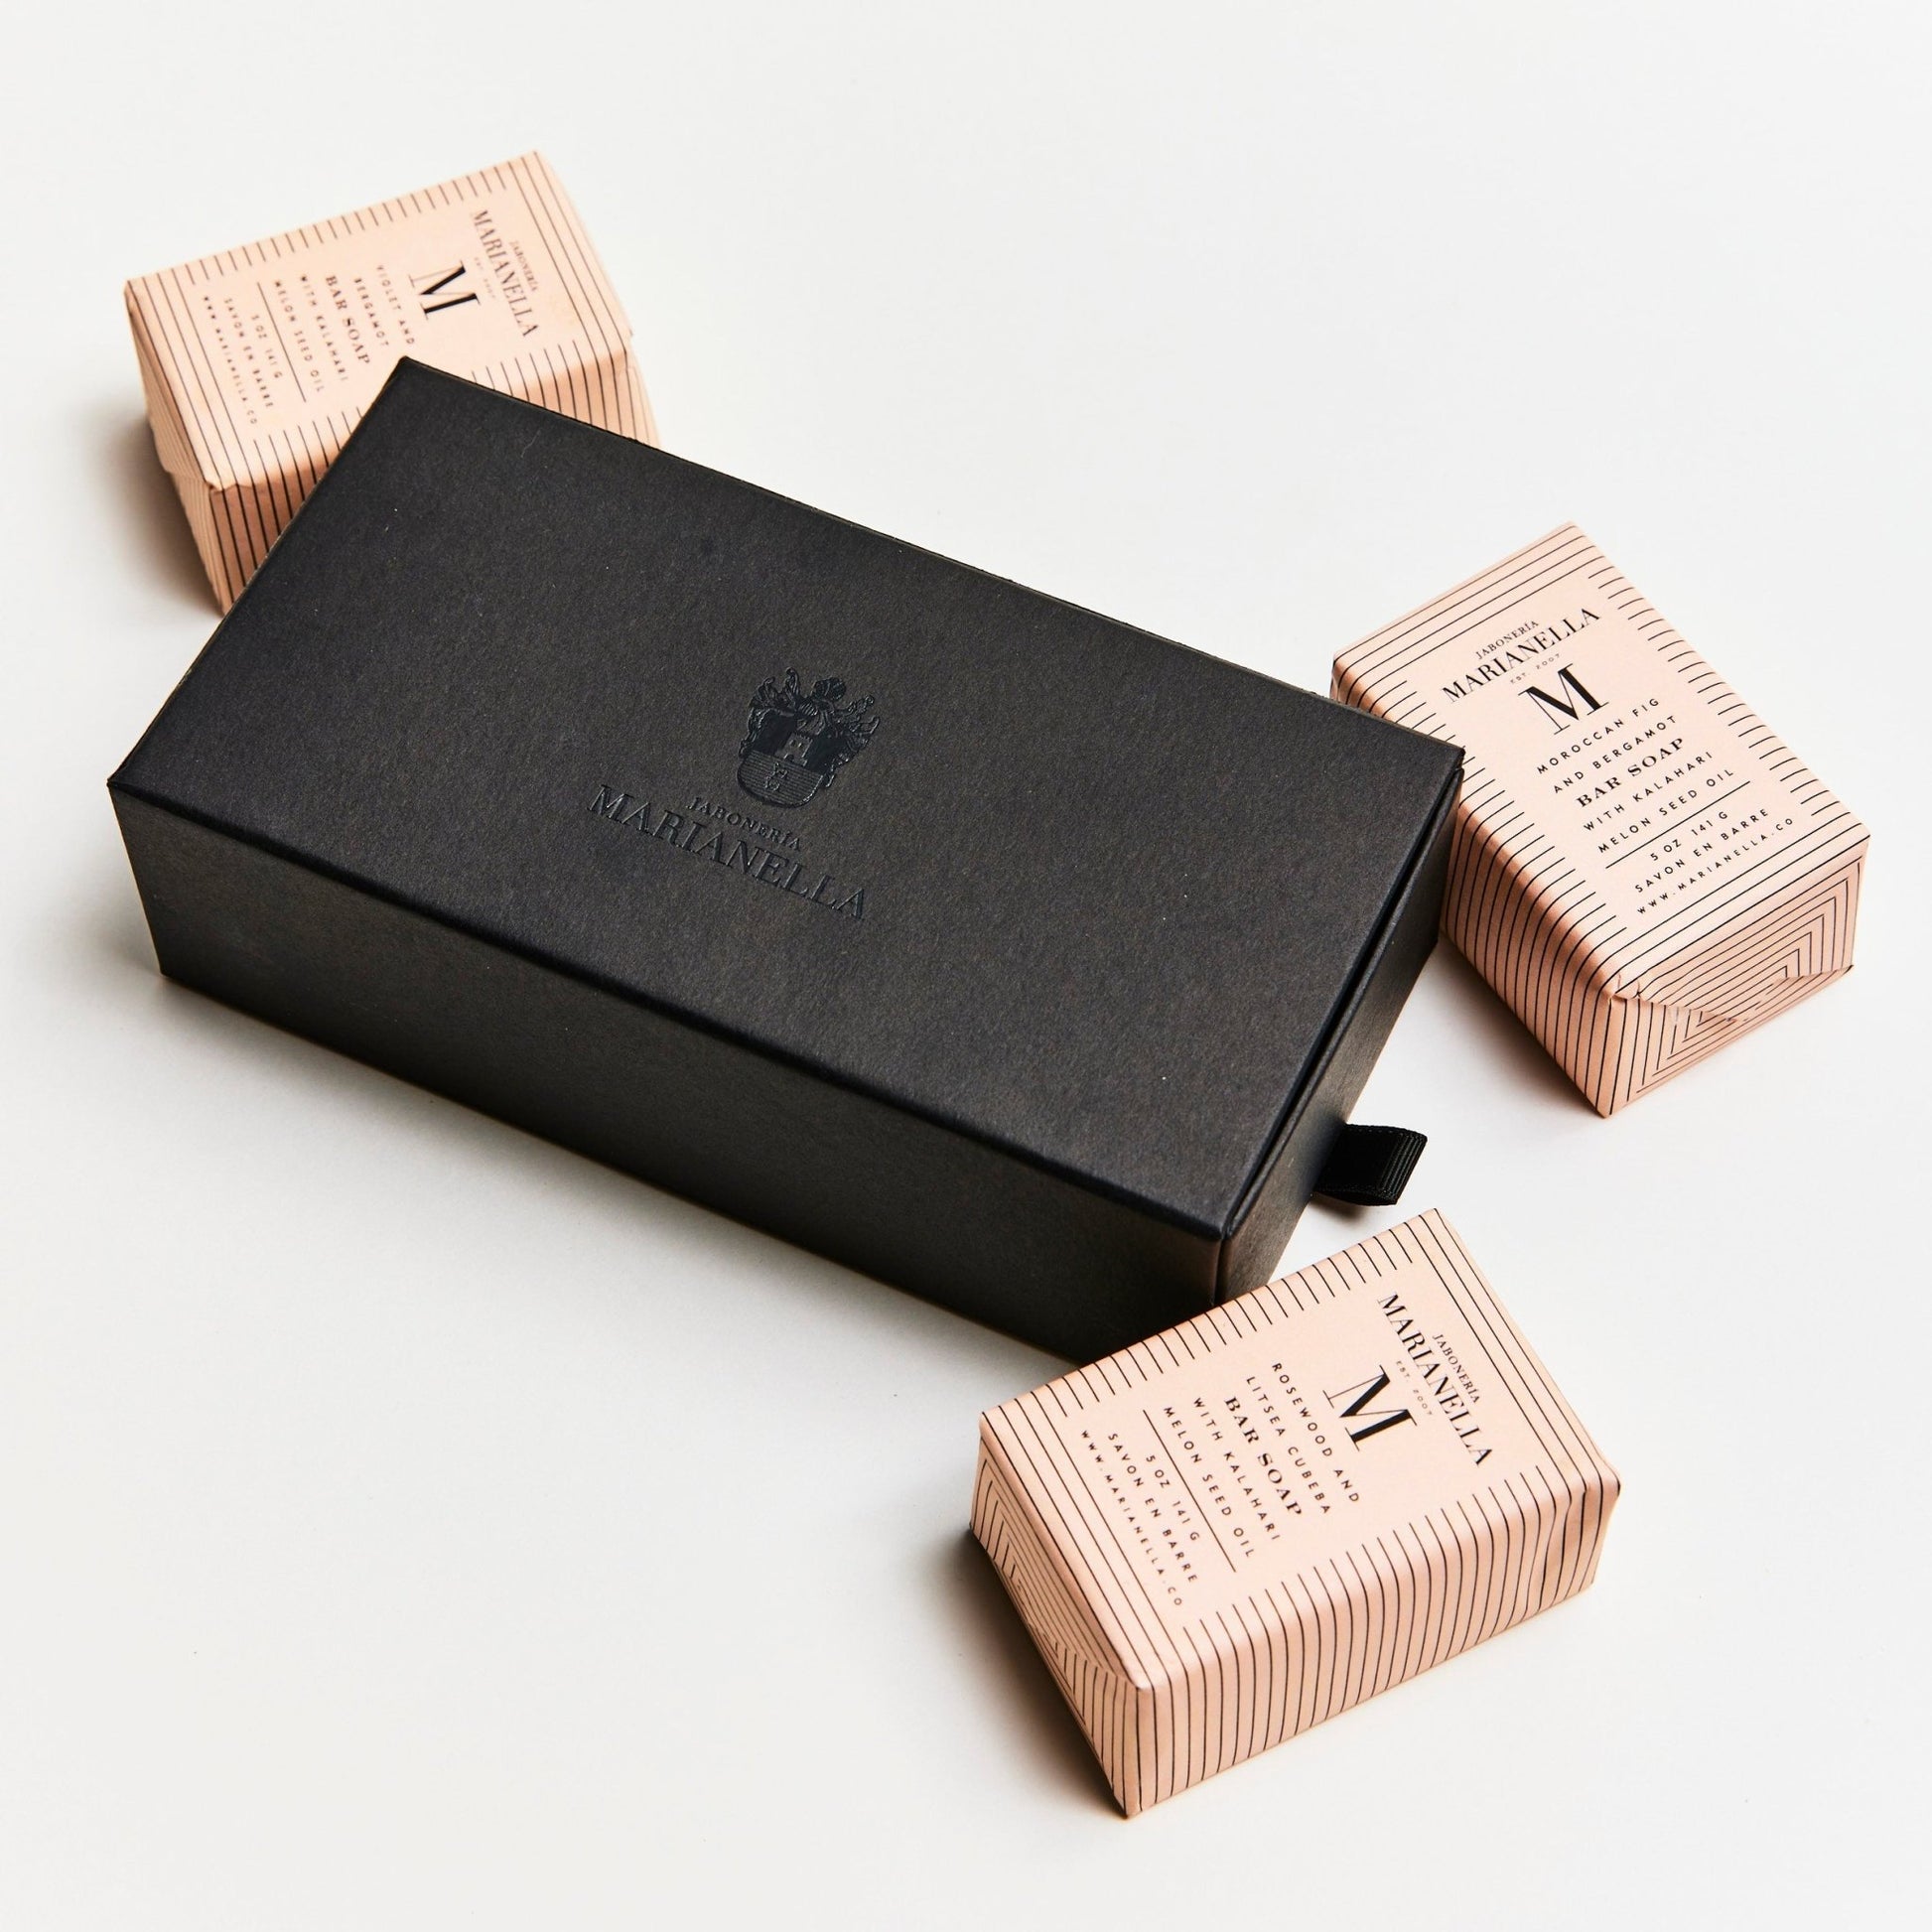 Three Soap Luxury Gift Box - Marianella